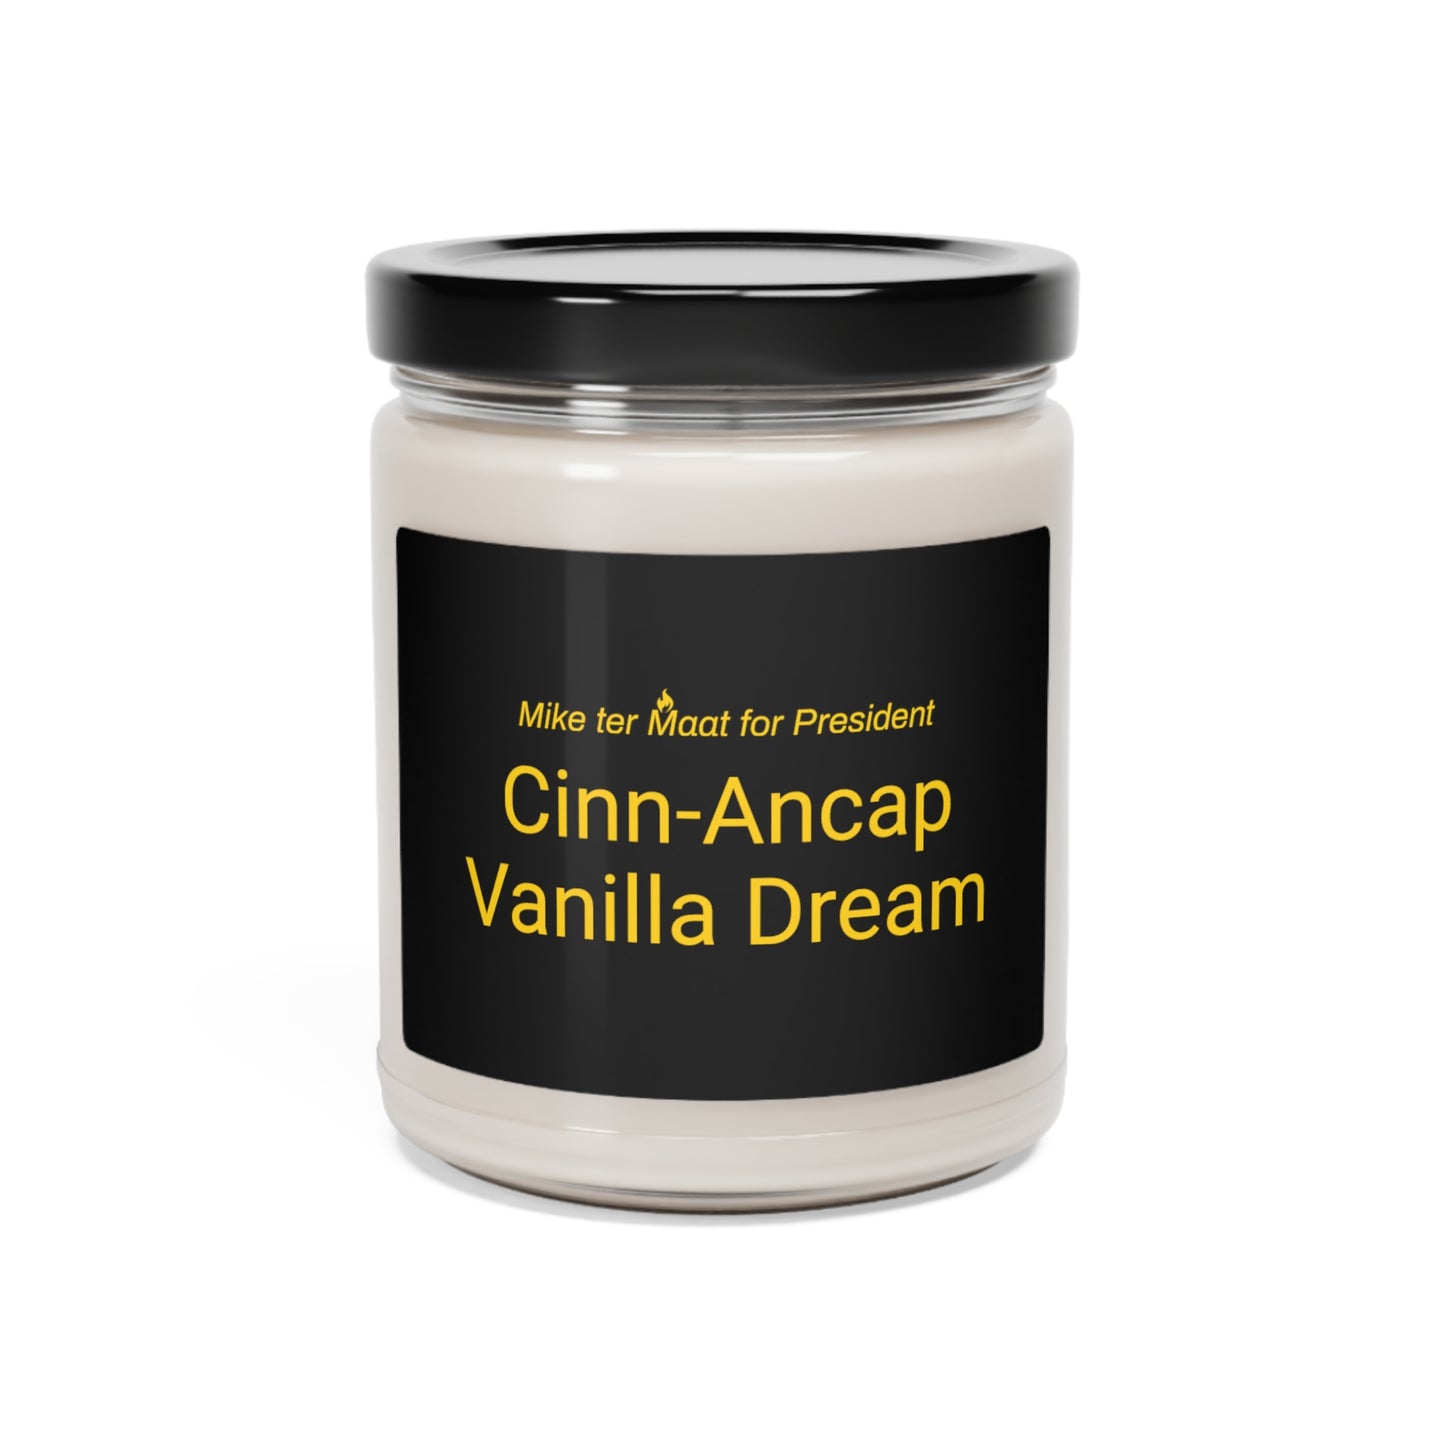 Cinn-Ancap Vanilla Dream Scented Soy Candle, 9oz